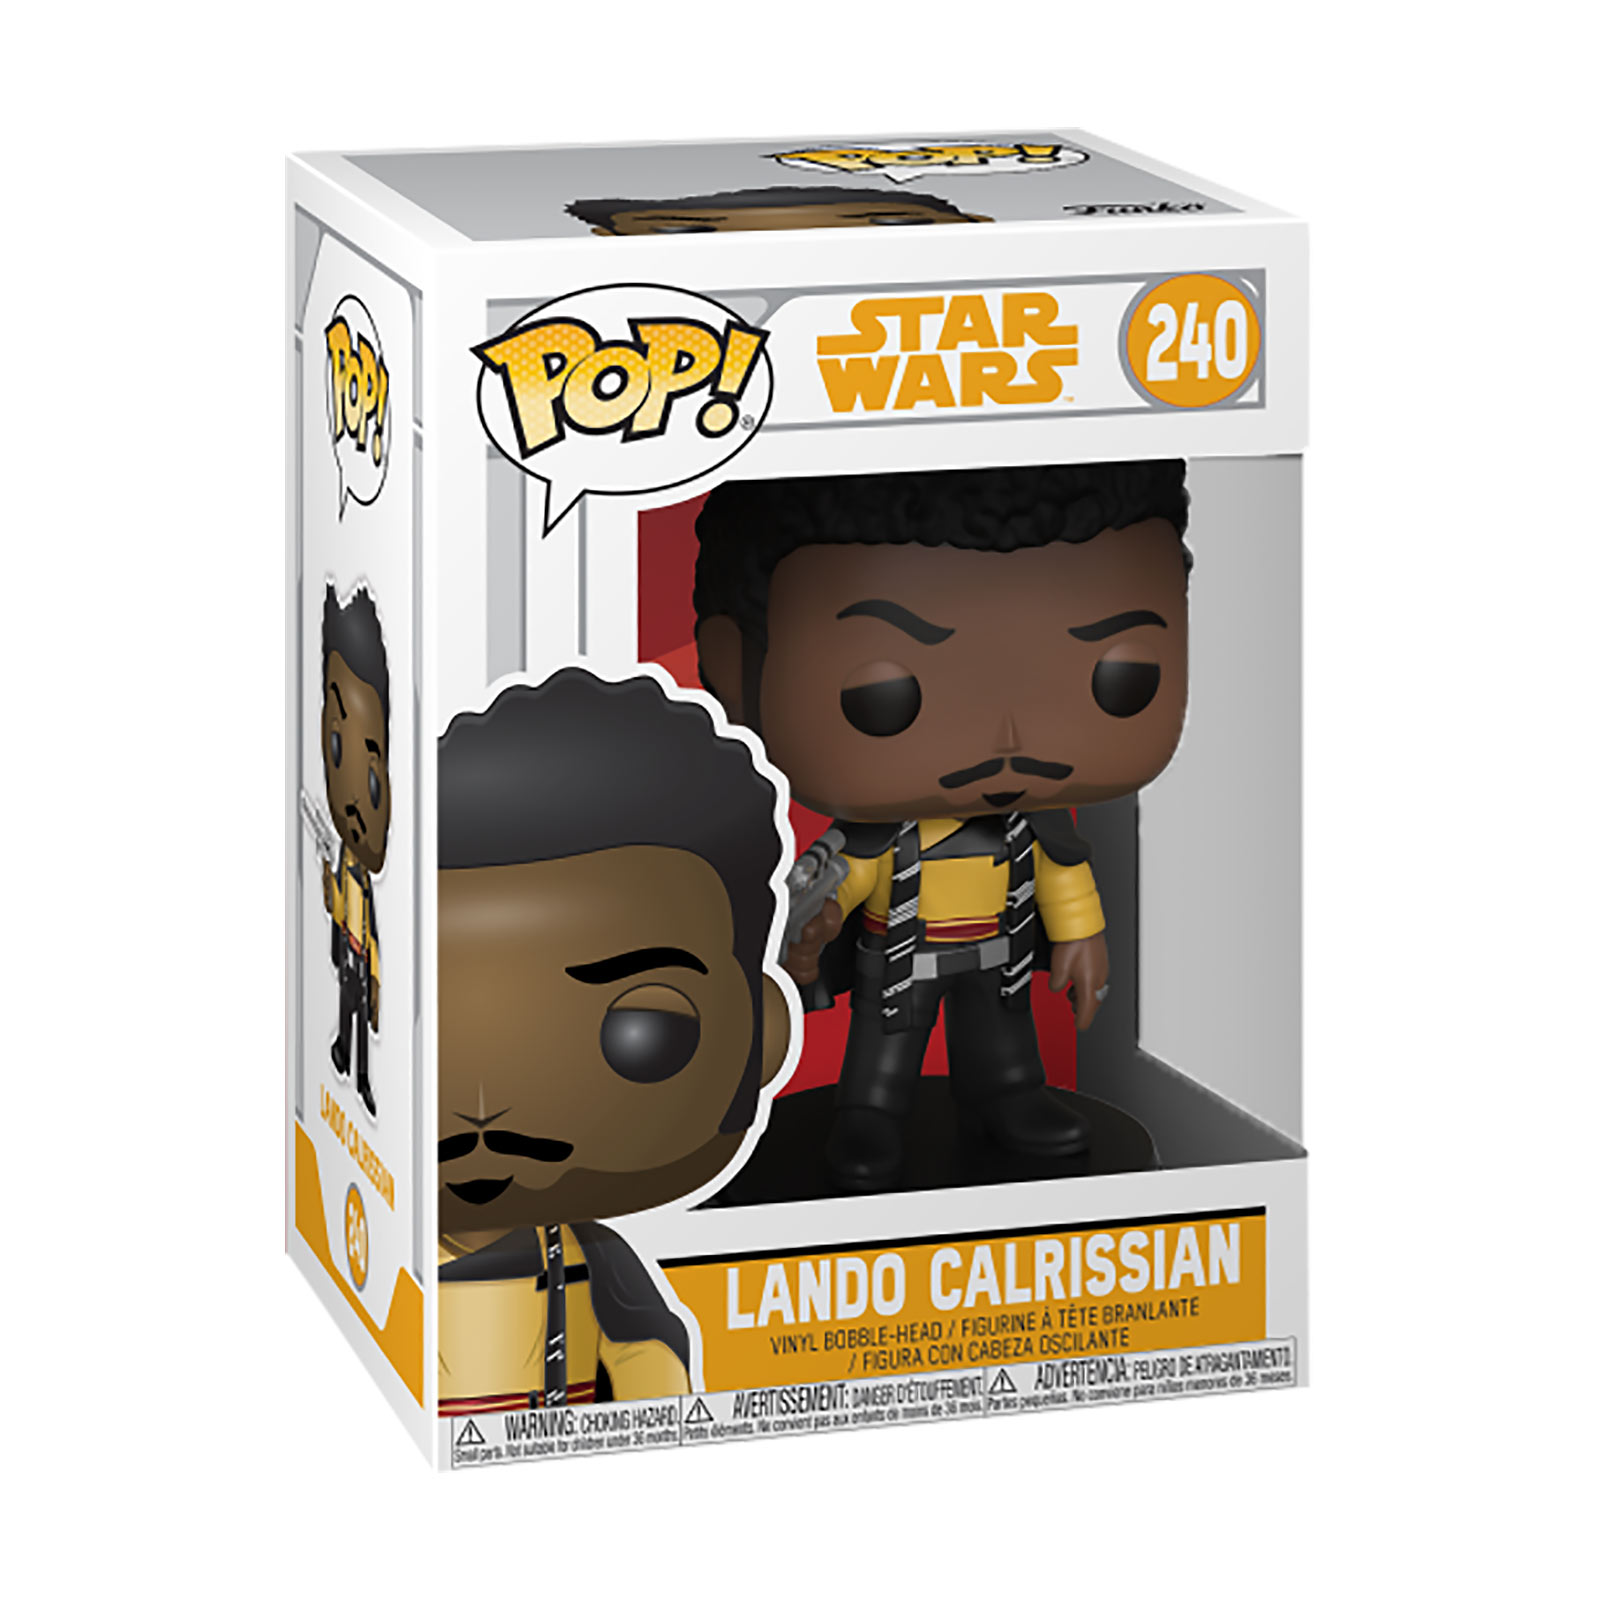 Star Wars - Lando Calrissian Funko Pop Bobblehead Figure